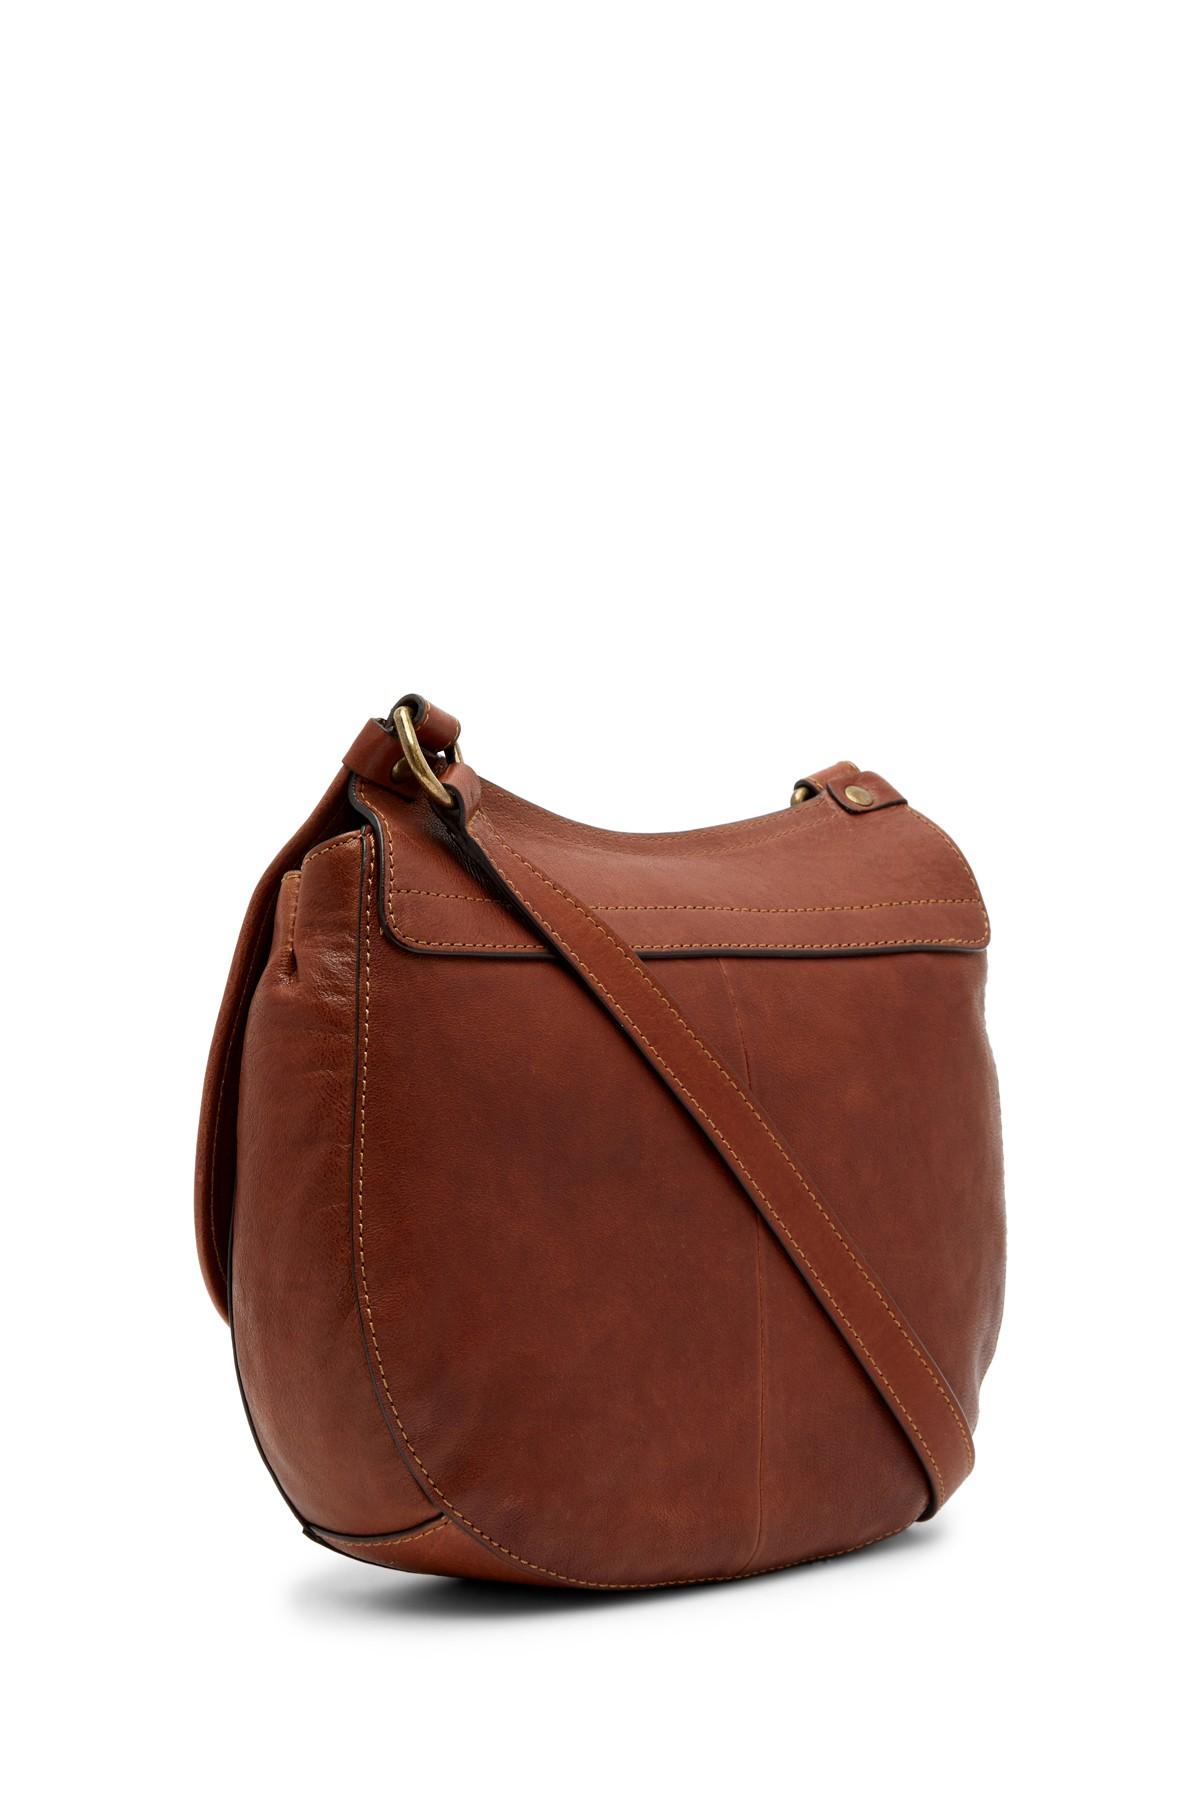 FRYE Rare Ilana Western Harness Tan Saddle Leather Shoulder Bag Crossbody  Purse - Etsy Singapore